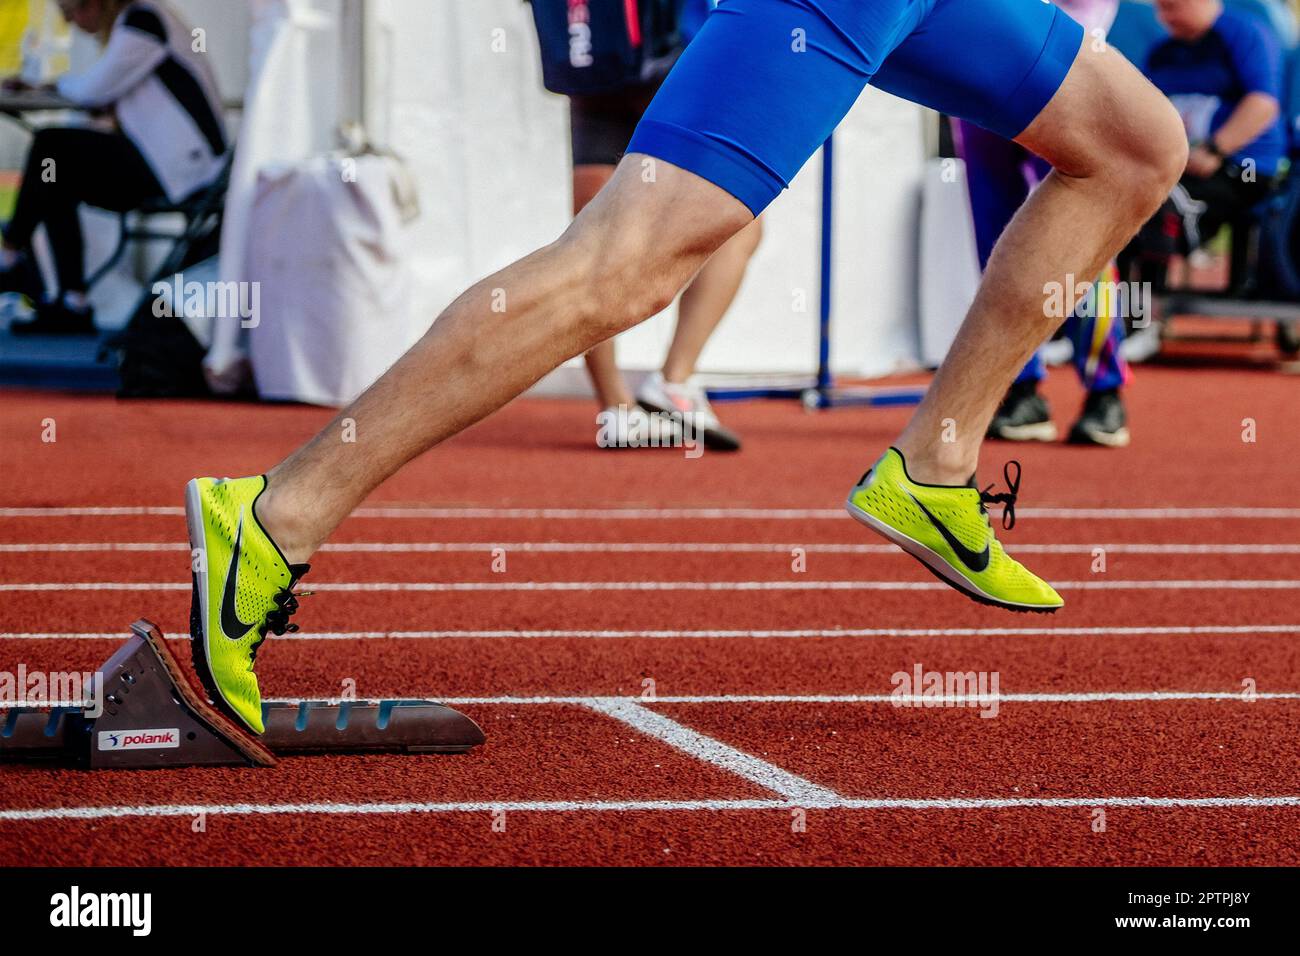 legs male athlete start running in Polanik starting blocks sprint race, Nike spikes shoes Stock Photo